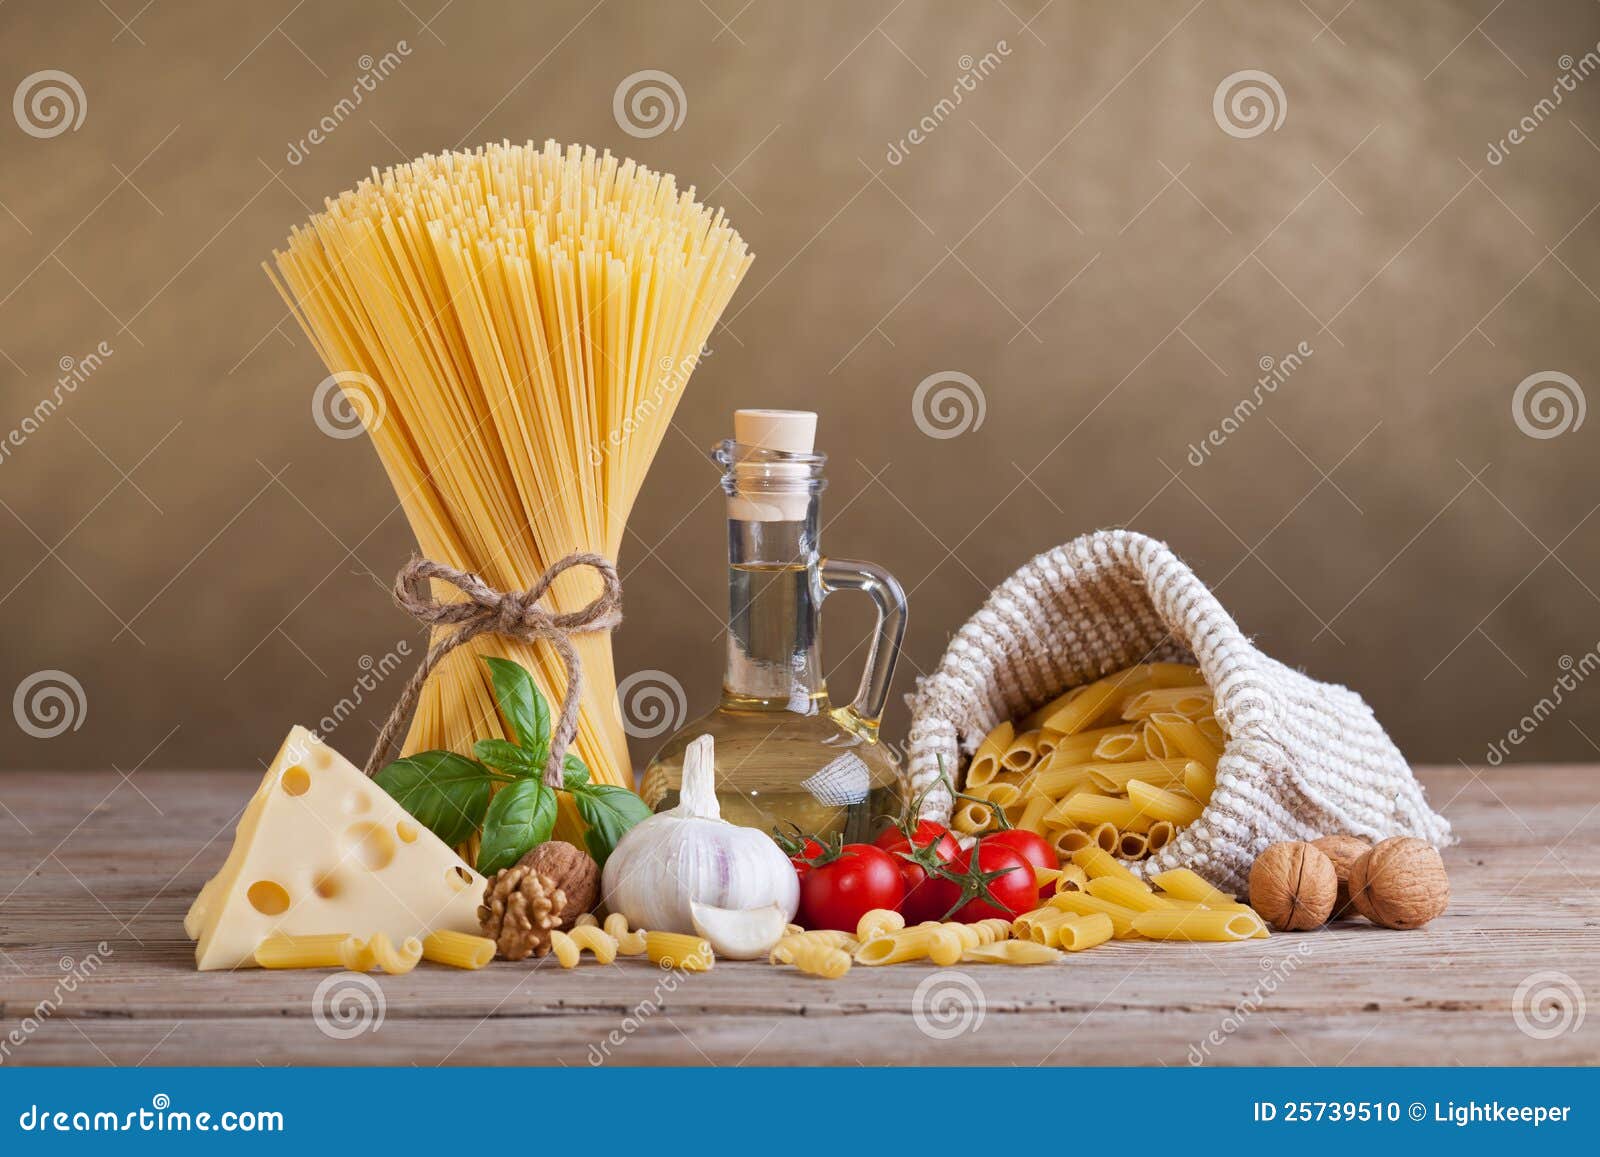 mediterranean cuisine and diet ingredients